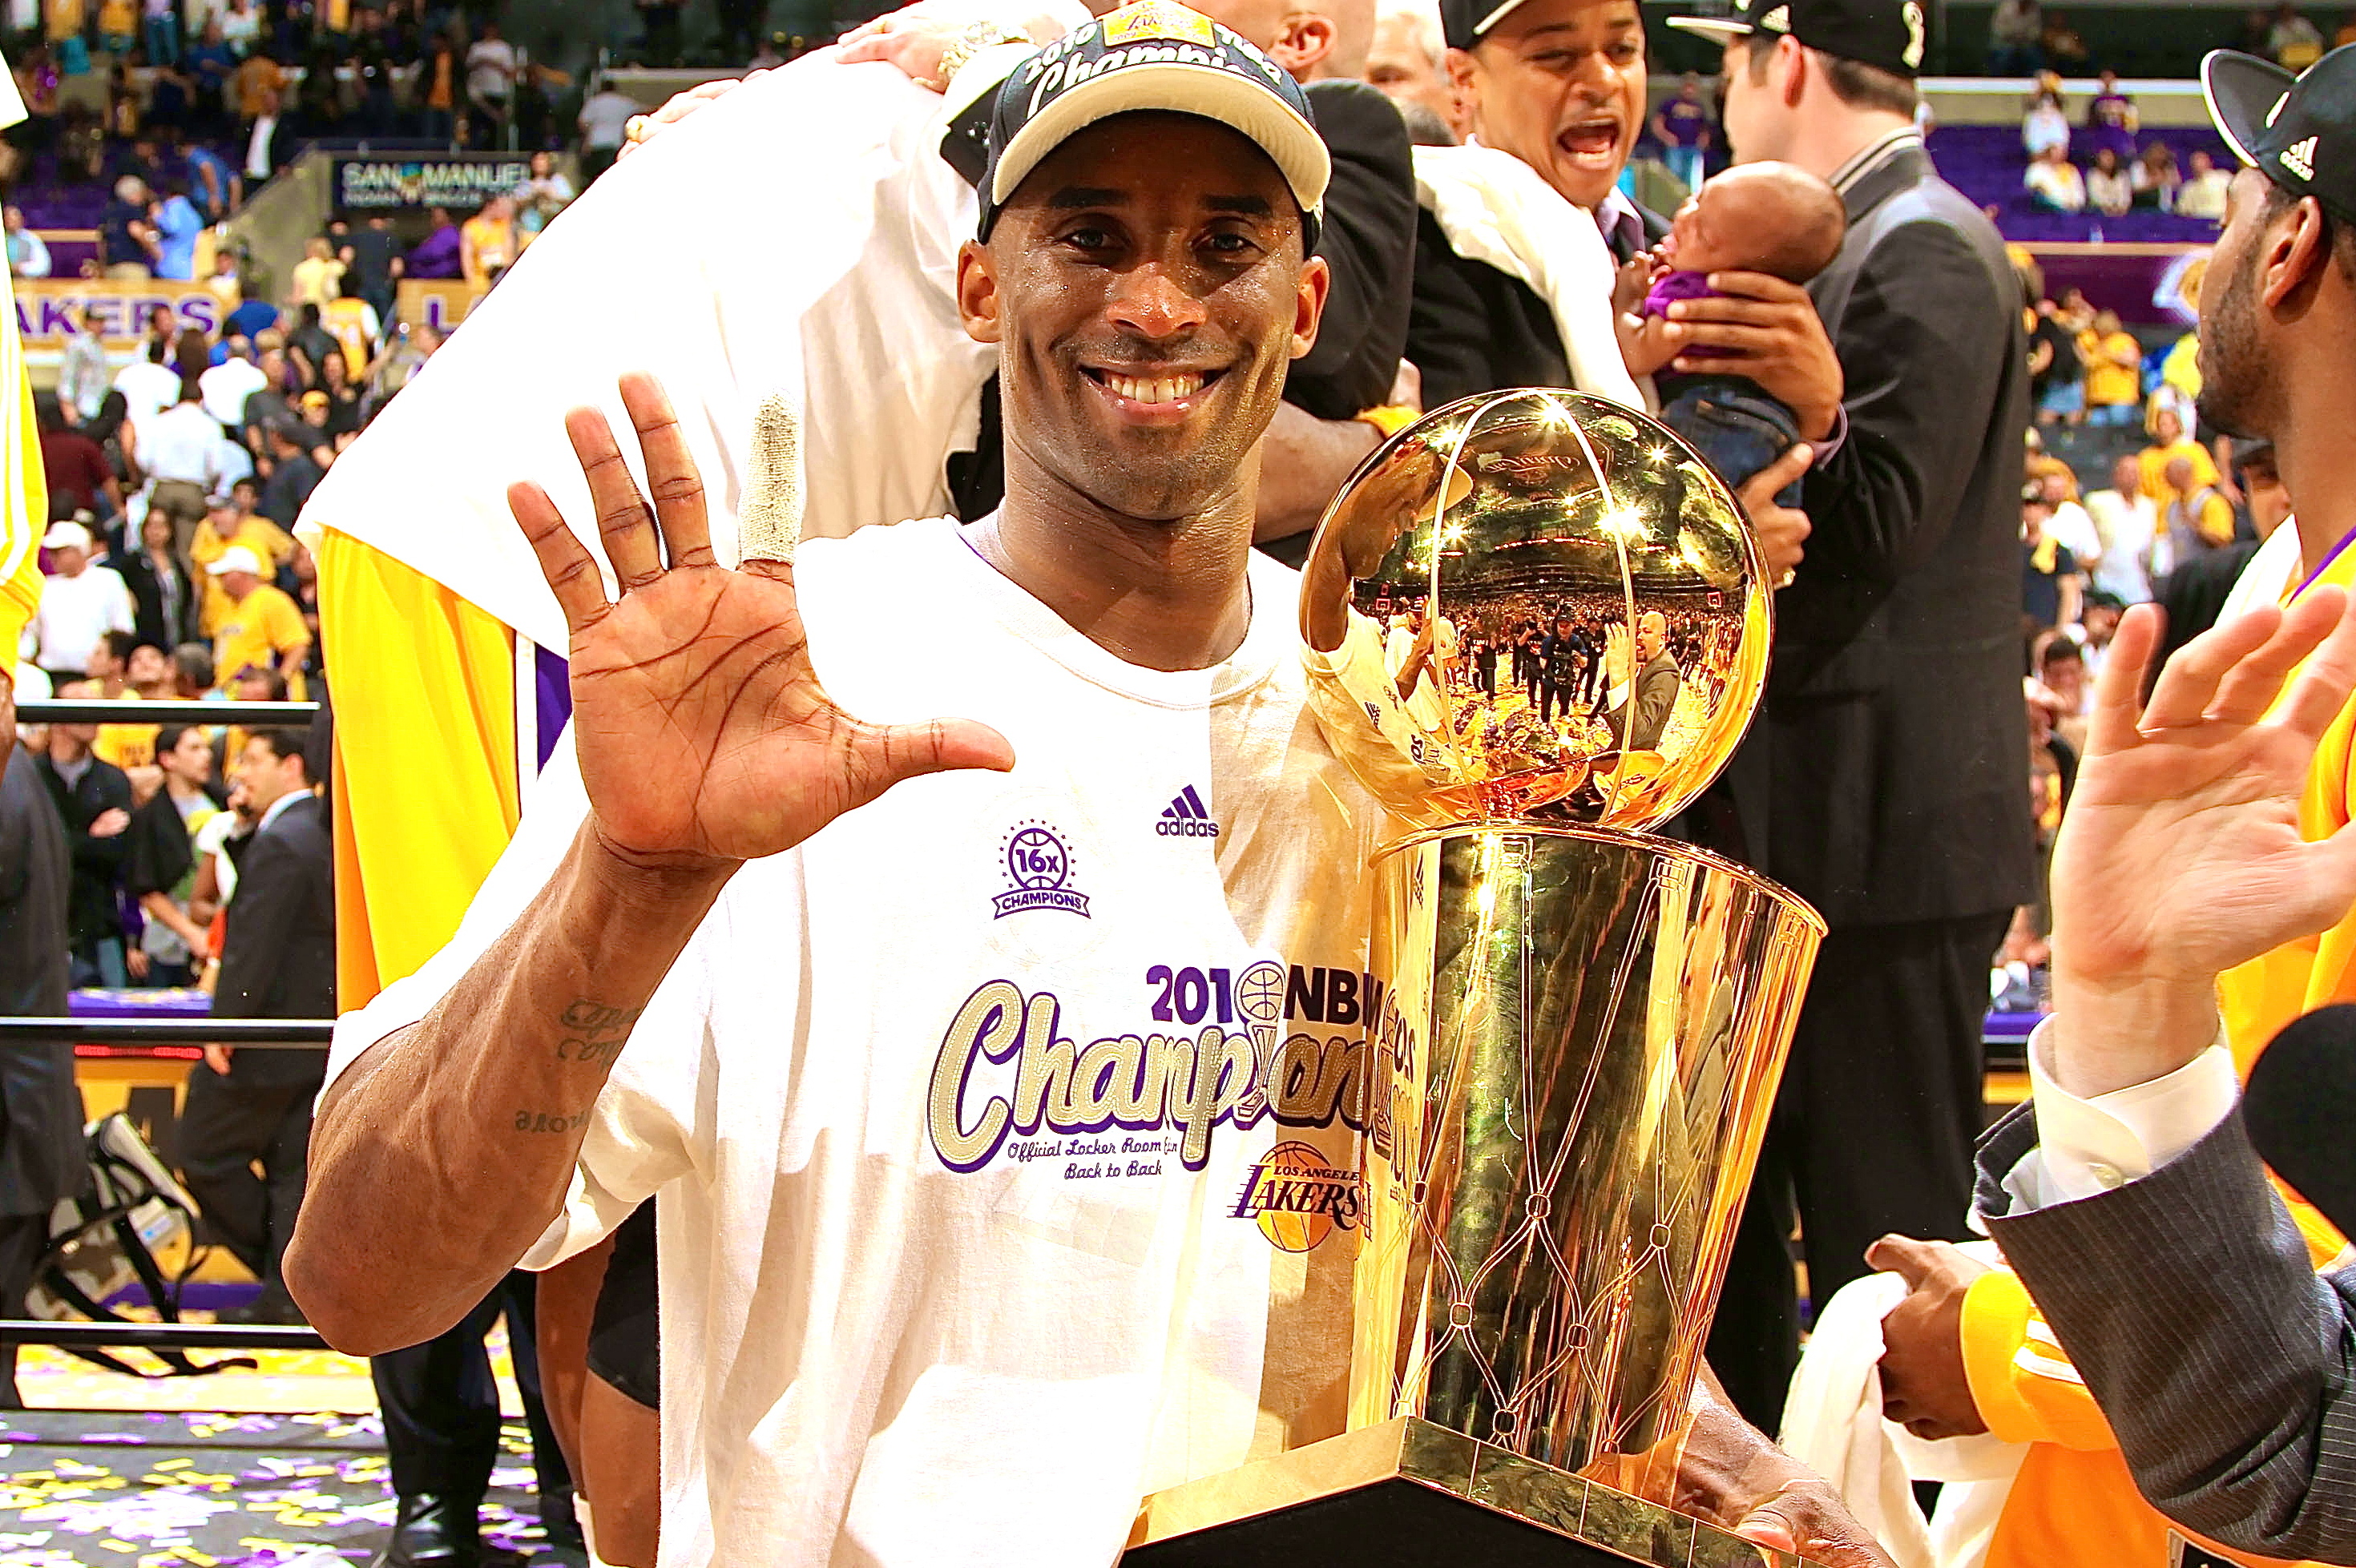 Kobe Bryant NBA Finals 2009 & 2010 full highlights 